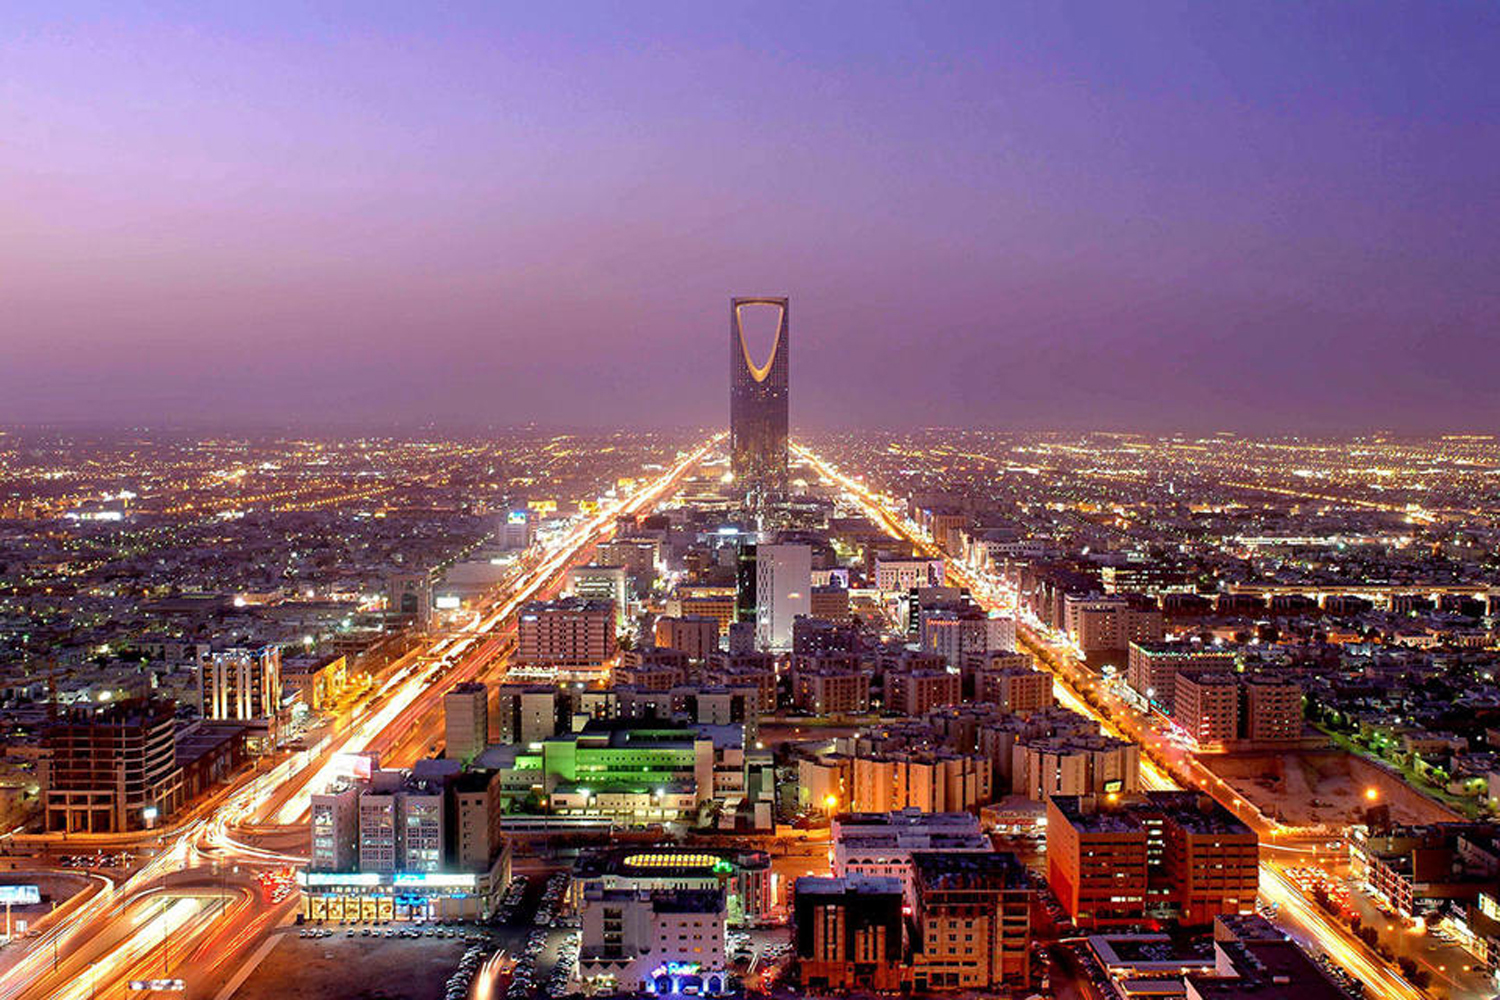 saudi tourism authority riyadh address